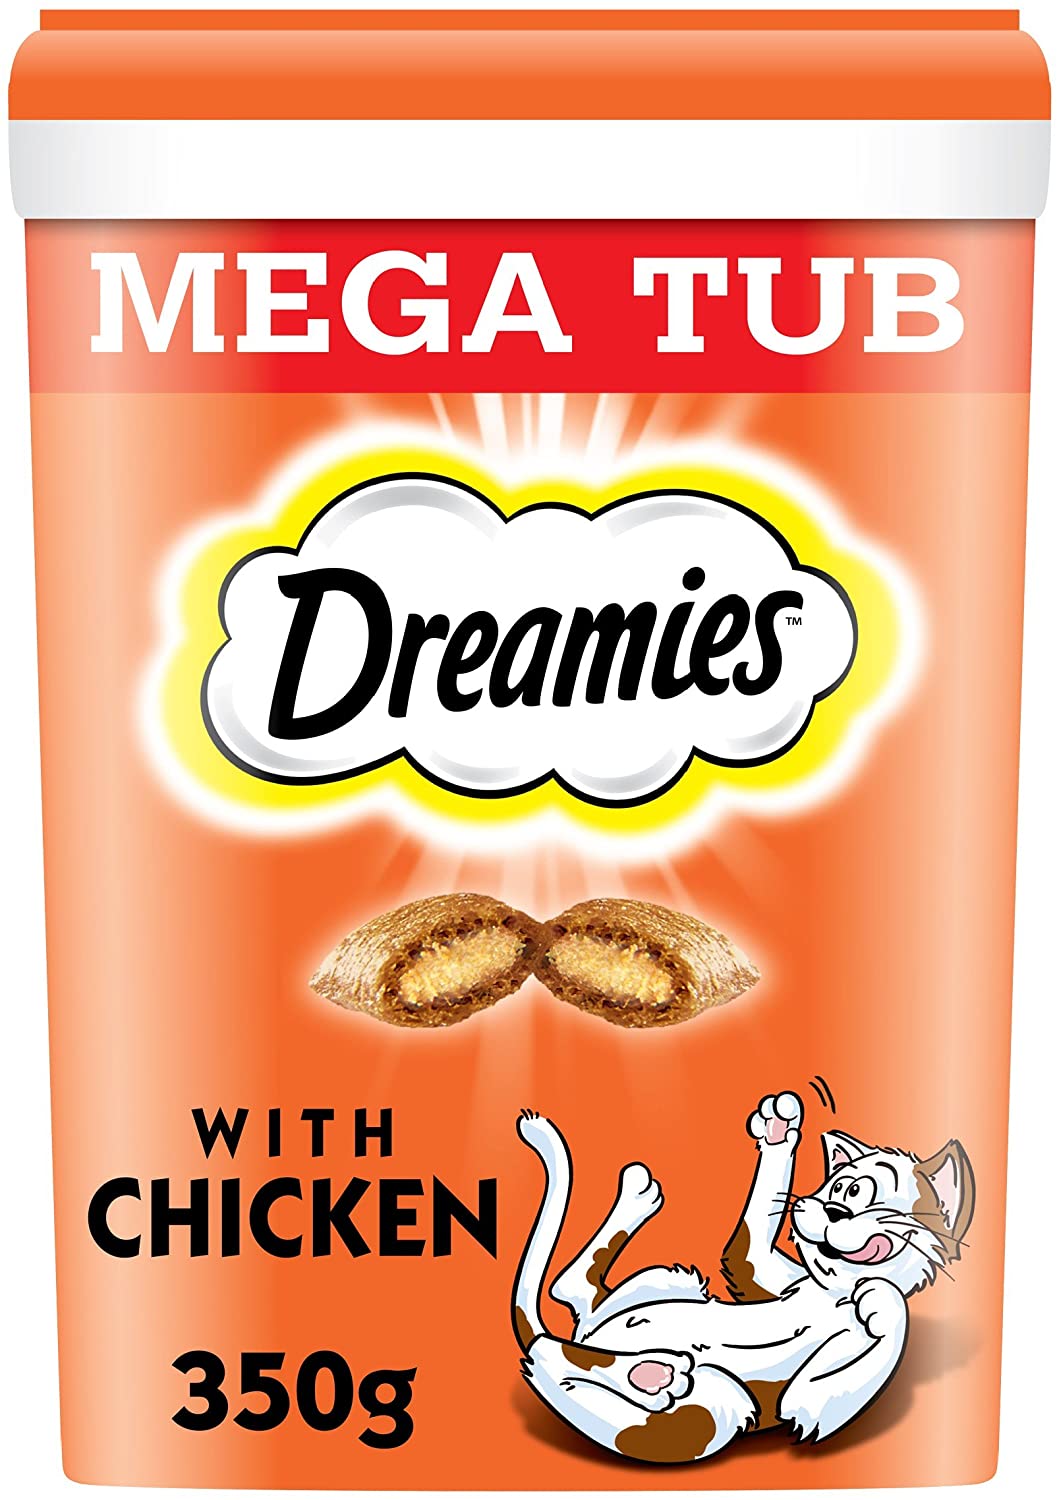  Dreamies -Golosinas para gatos, sabor: Pollo MegaTub, 350 g (Pack of 2) 